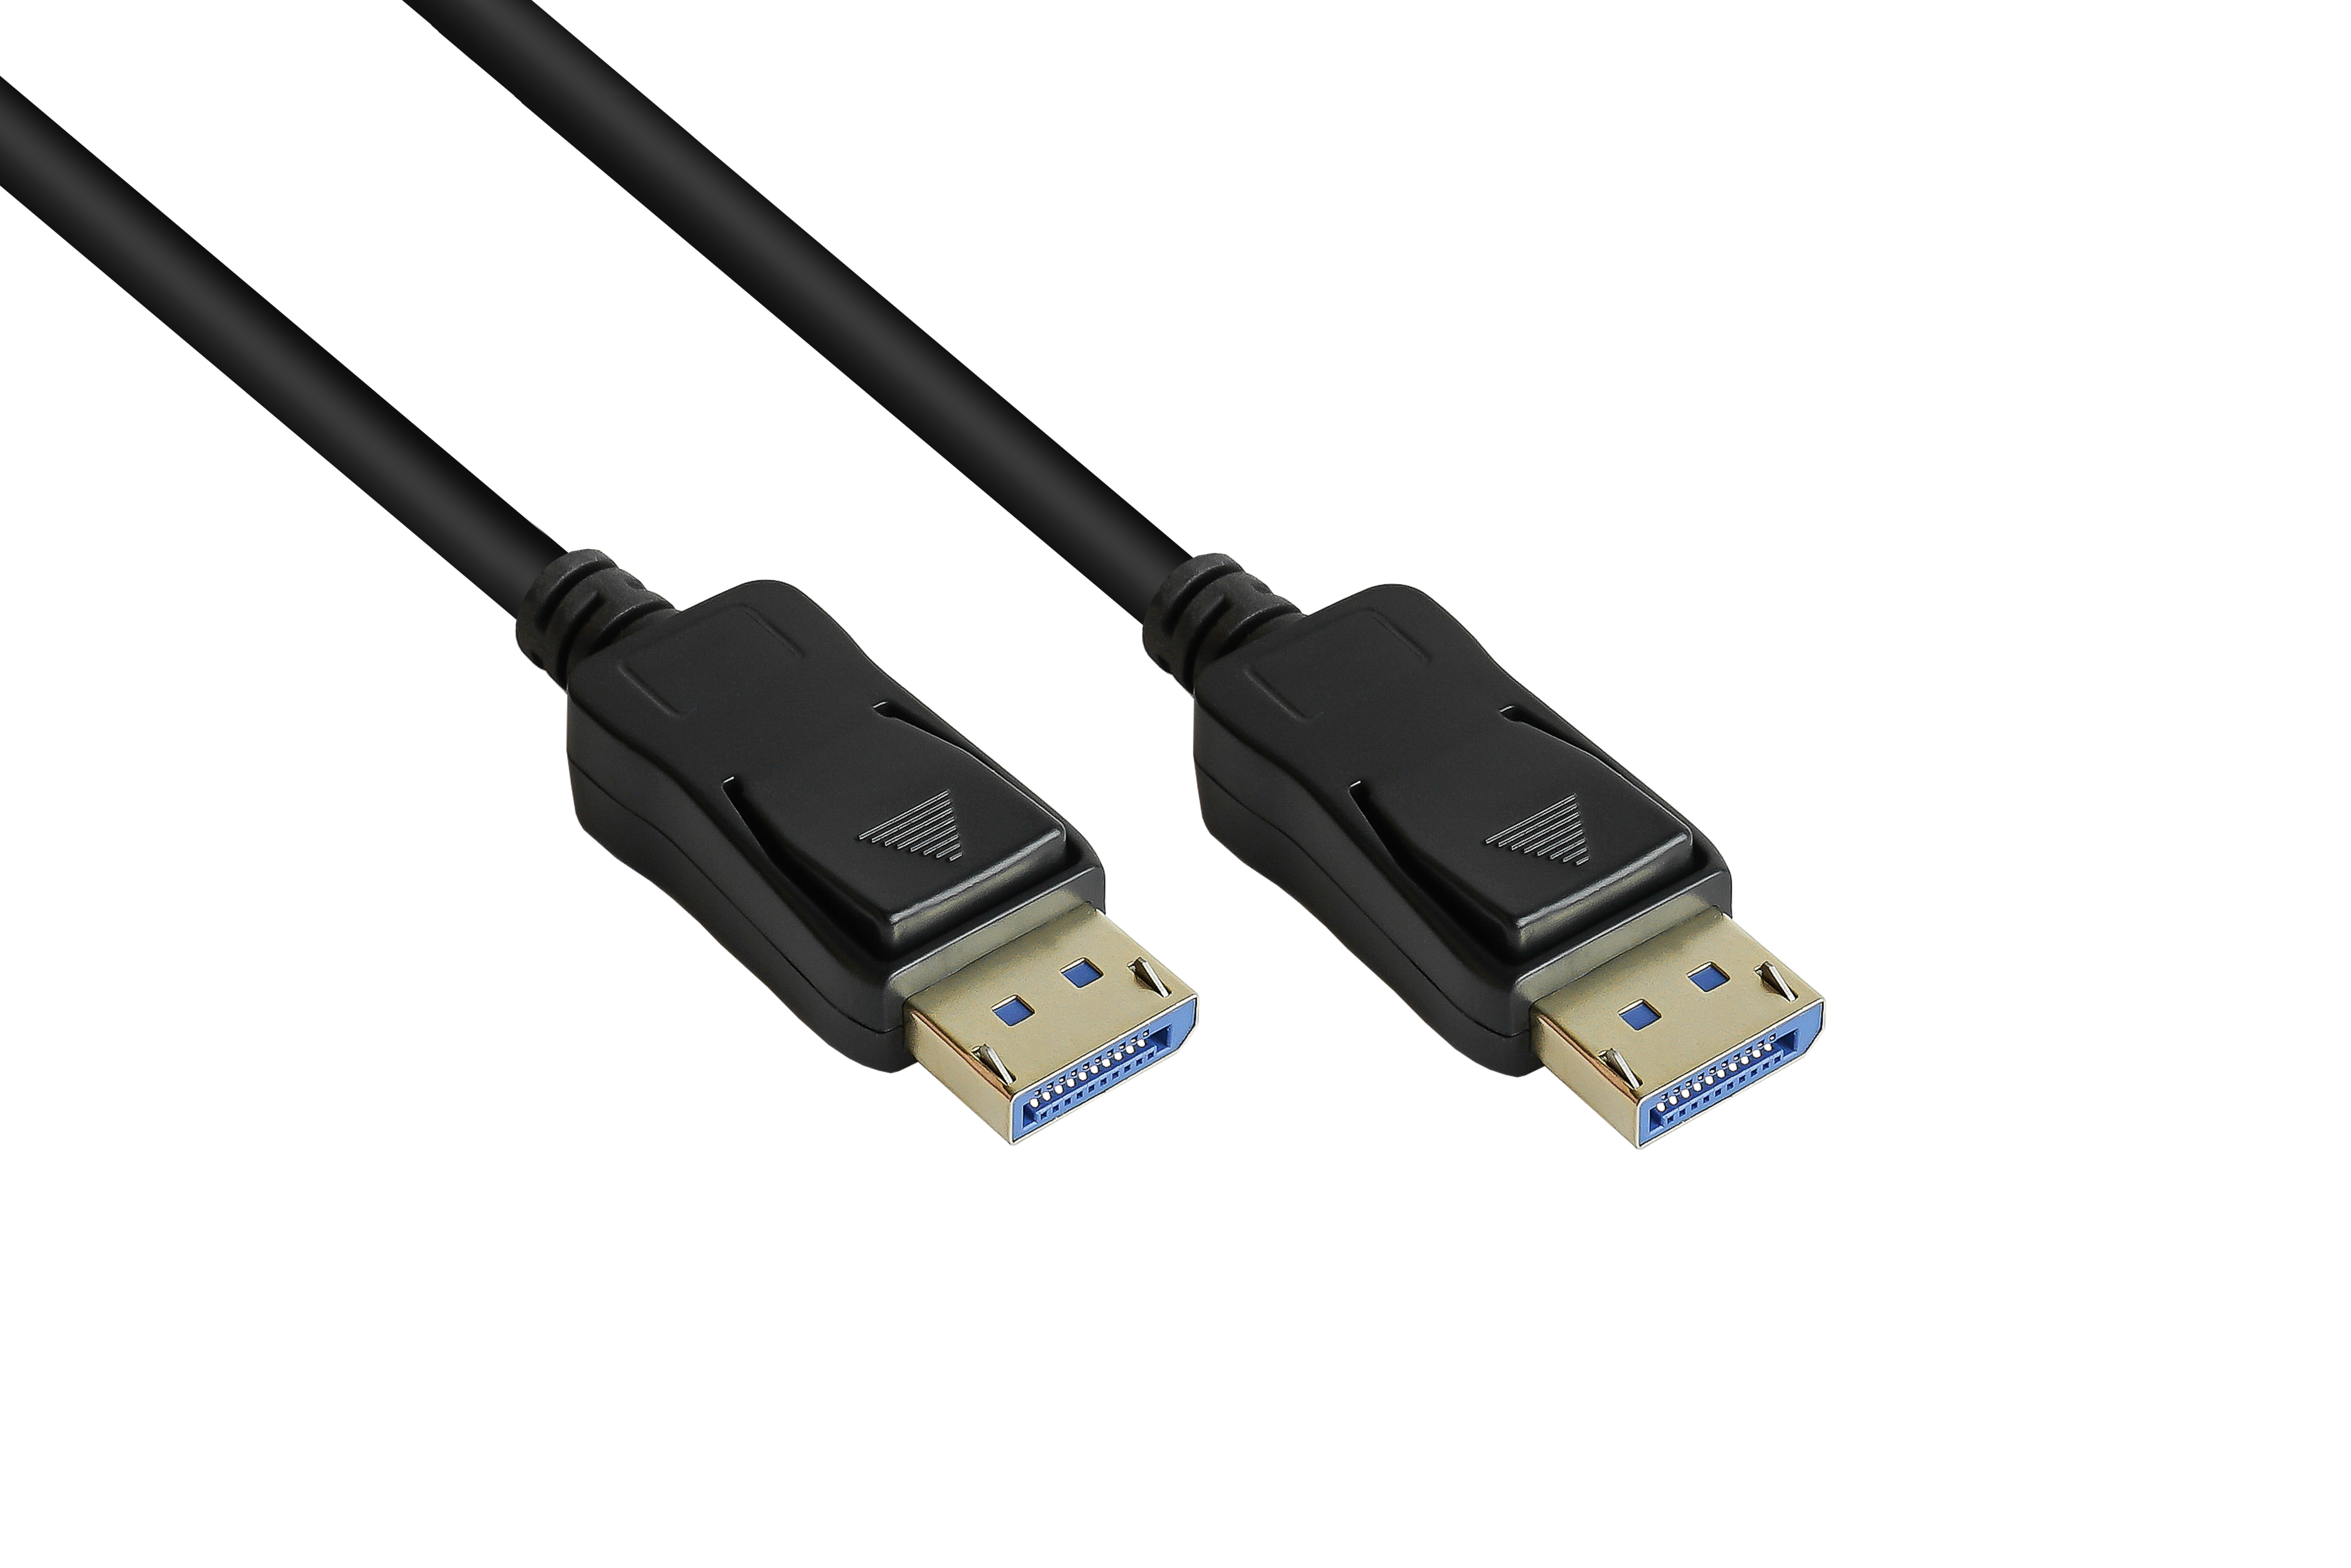 GOOD CONNECTIONS Gbit/s, 3 3m, m Kontakte, vergoldete Anschlusskabel schwarz, CU, 2.0, 54 Displayport